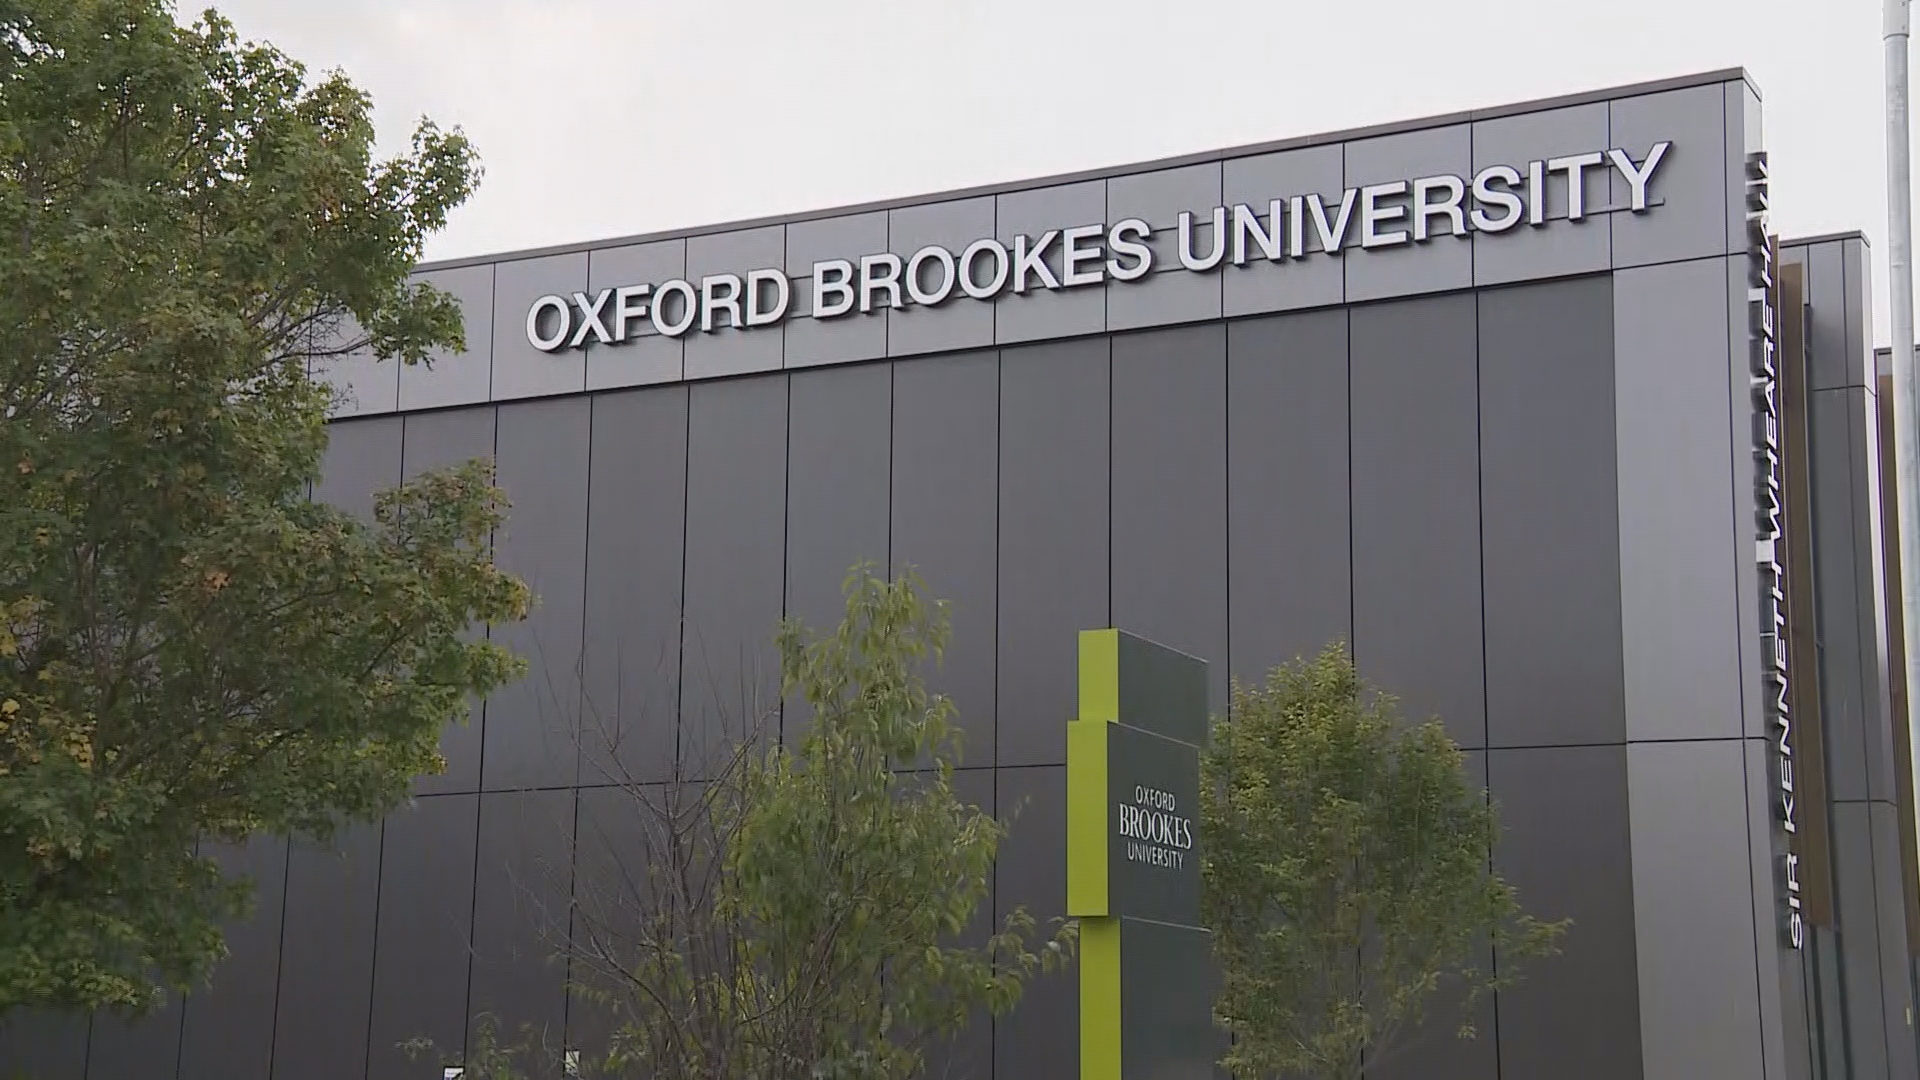 Oxford Brookes University ranking